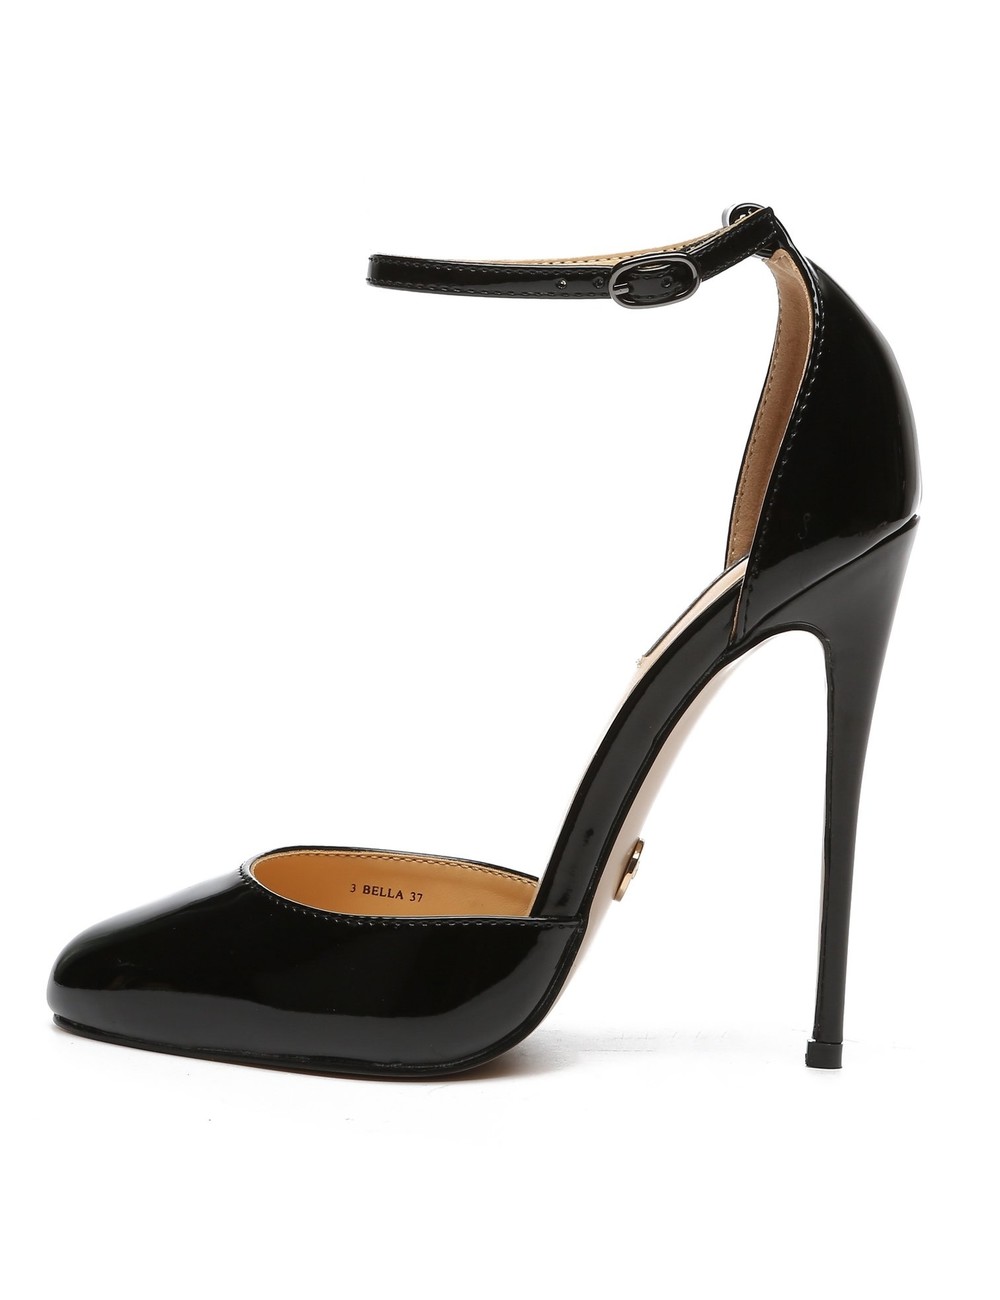 Giaro BELLA BLACK SHINY OPEN PUMPS - Giaro High Heels | Official store ...